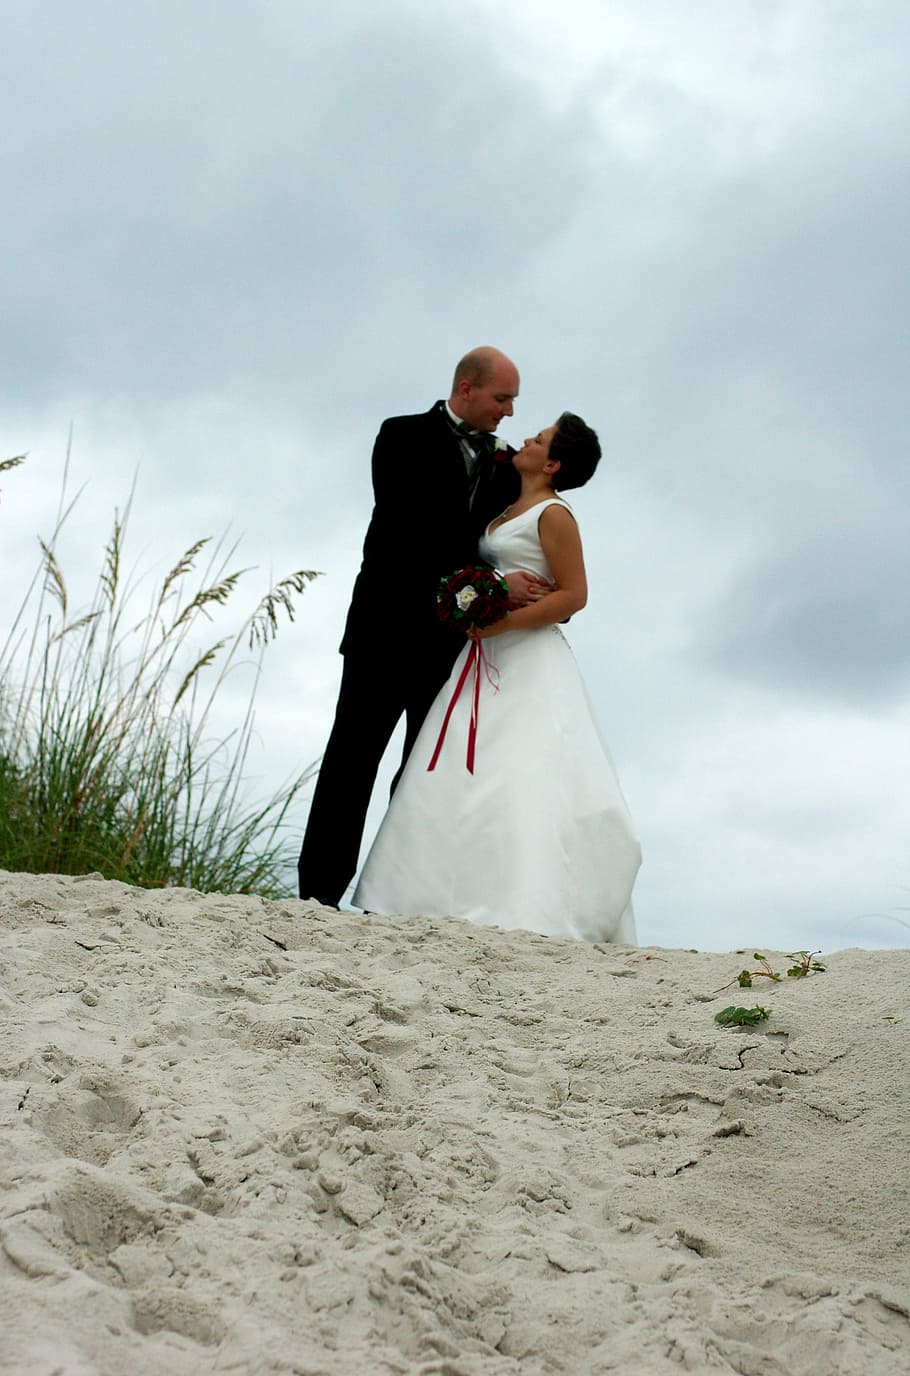 wedding, beach, couple, bride, groom, white, sand, romantic, newlywed, life events